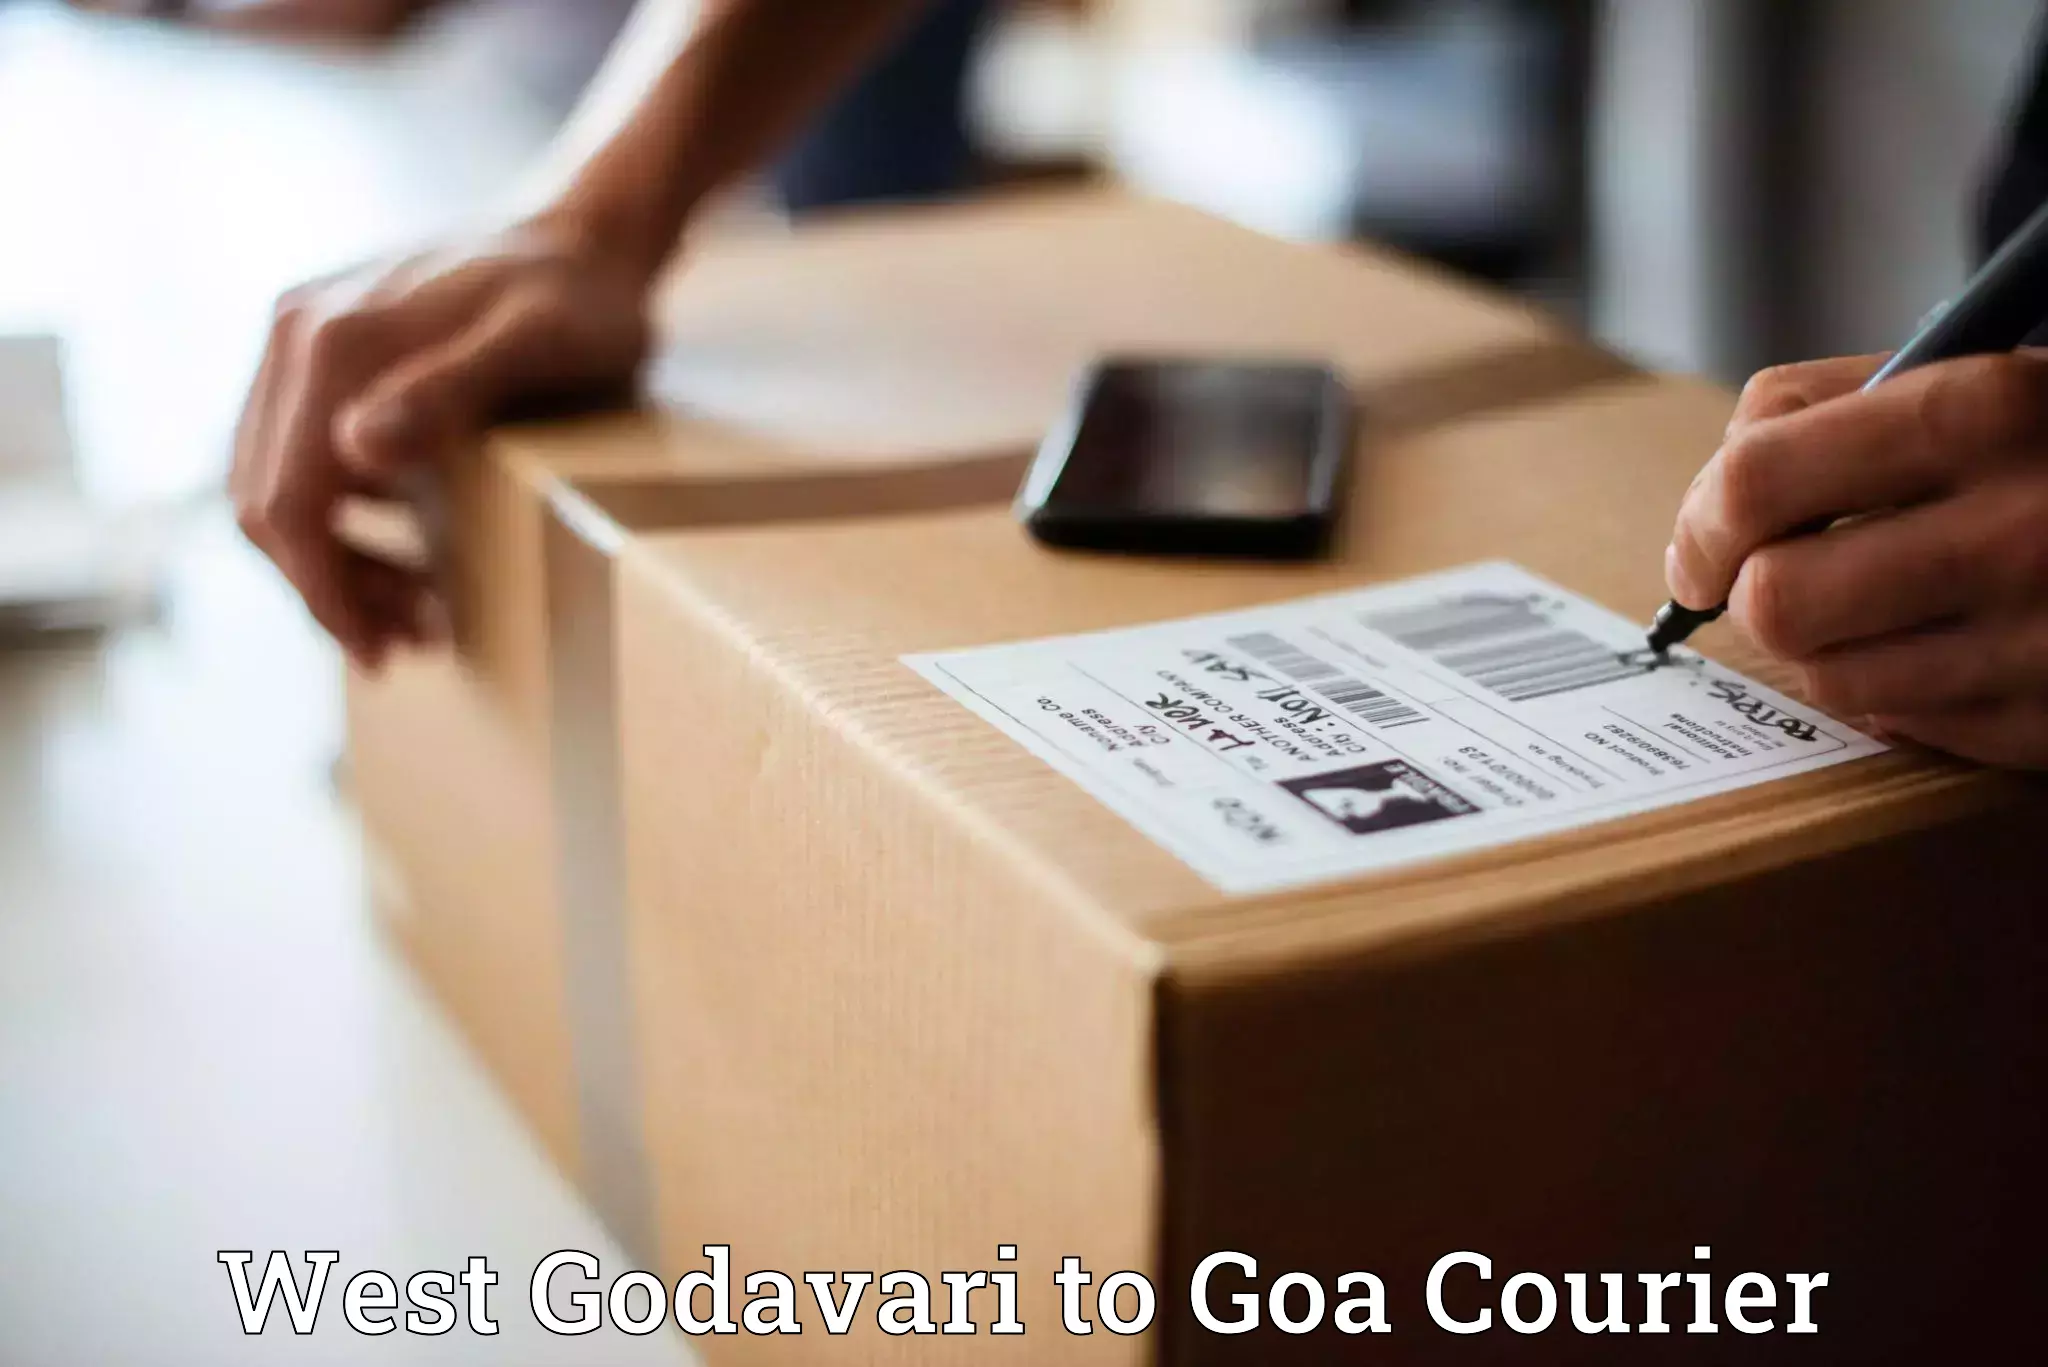 Cash on delivery service West Godavari to Bicholim